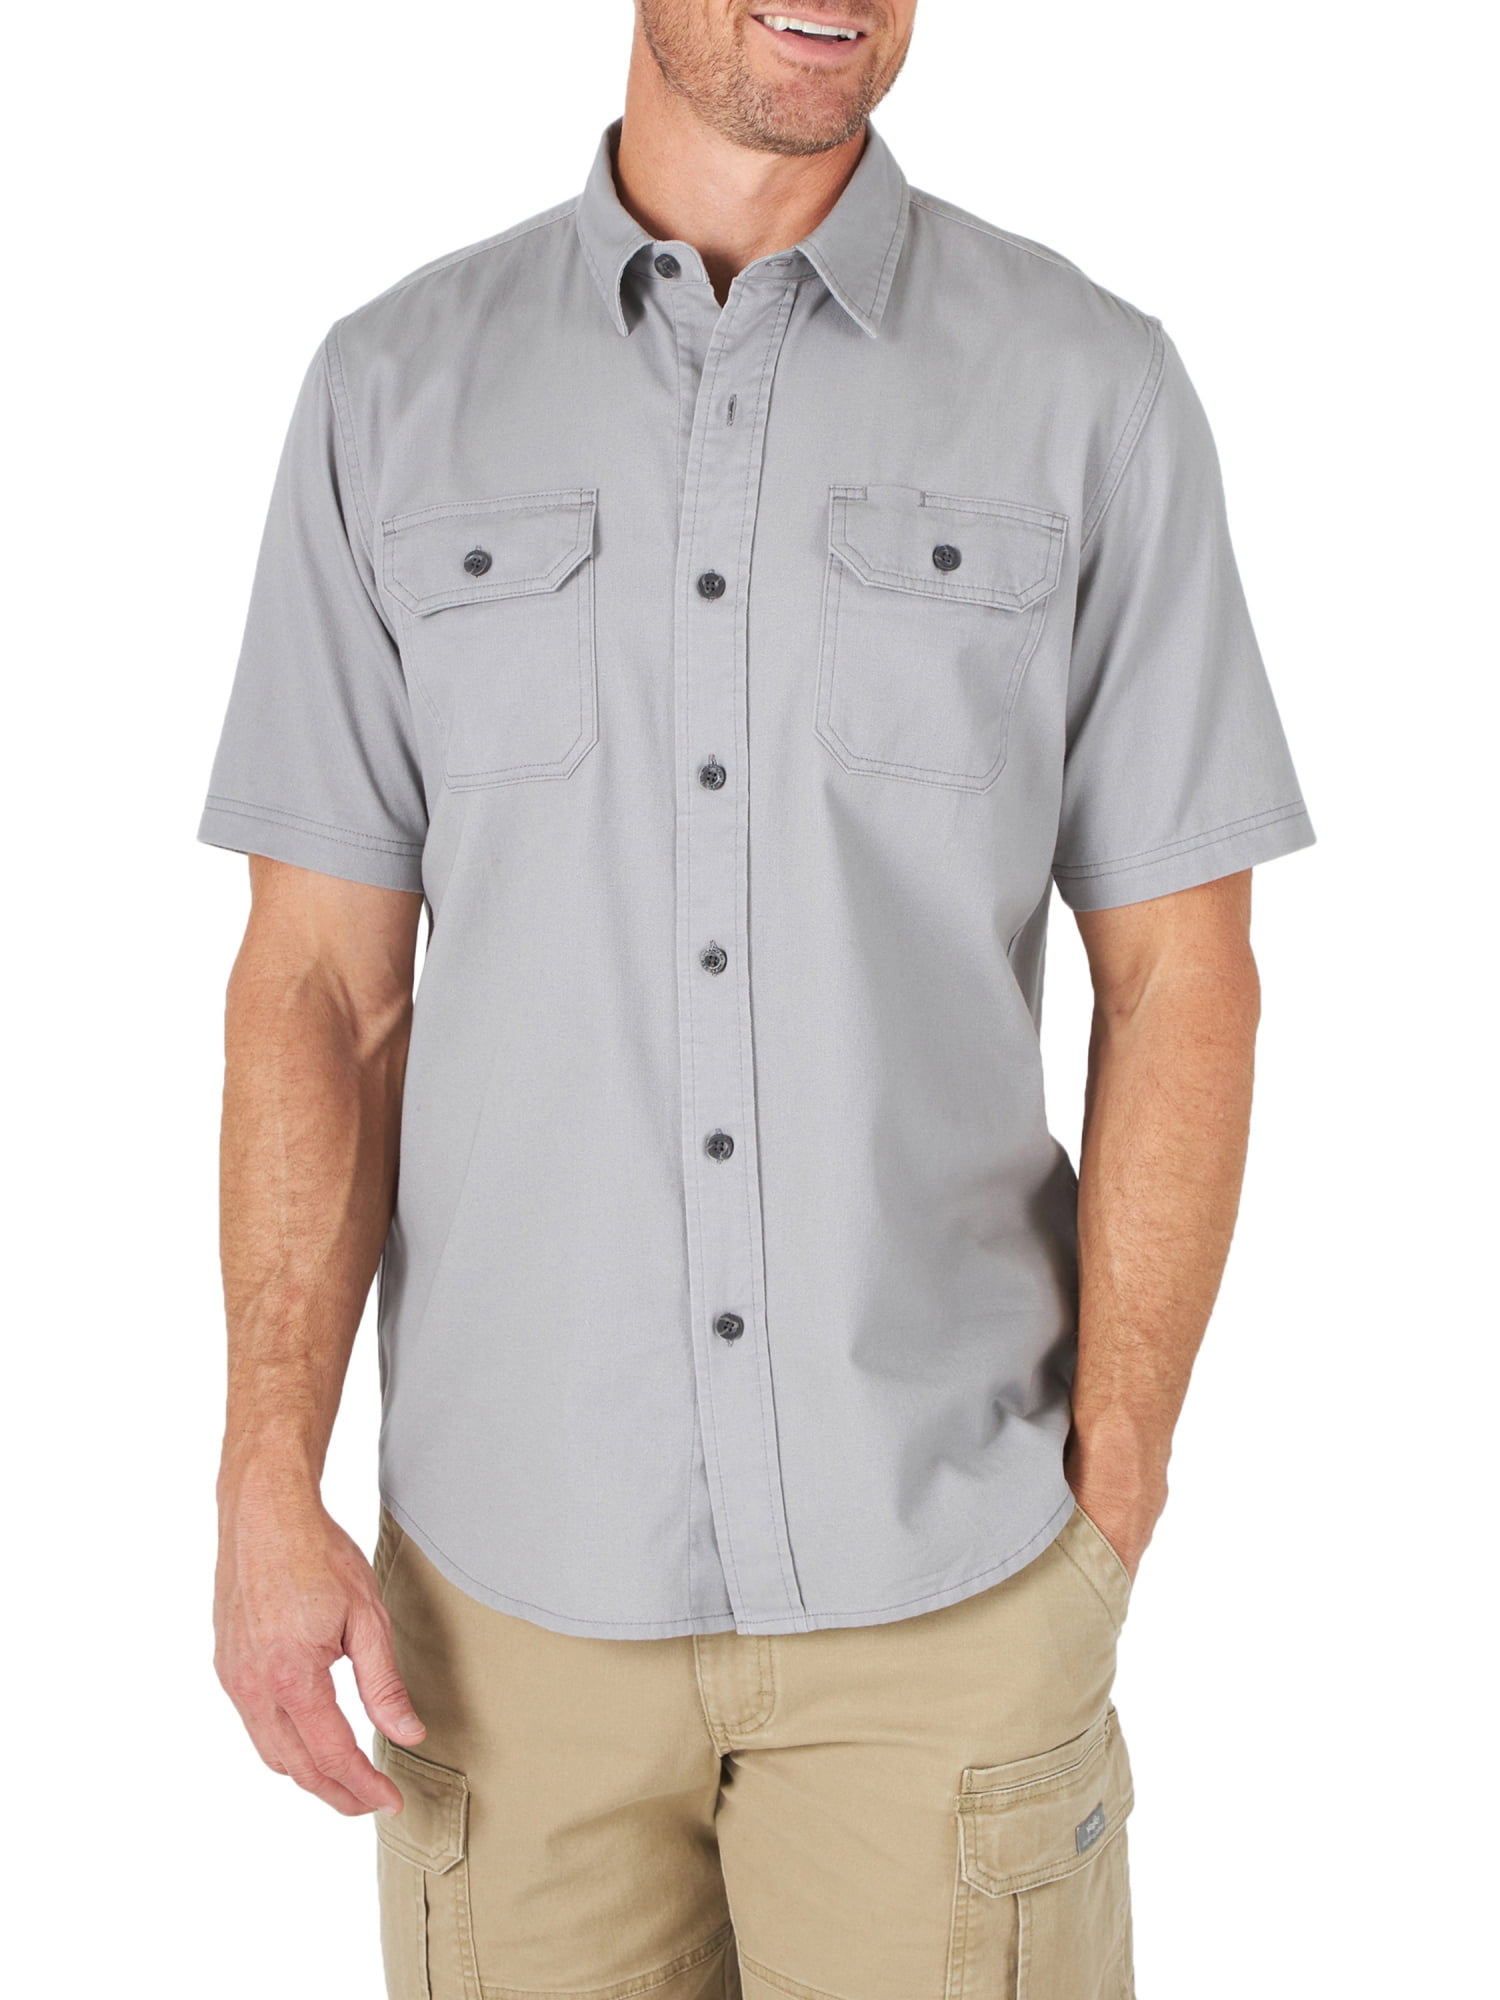 Beloved Mens Lightweight Button Down Relaxed Fit Short Sleeve Tops Blouses Shirt 